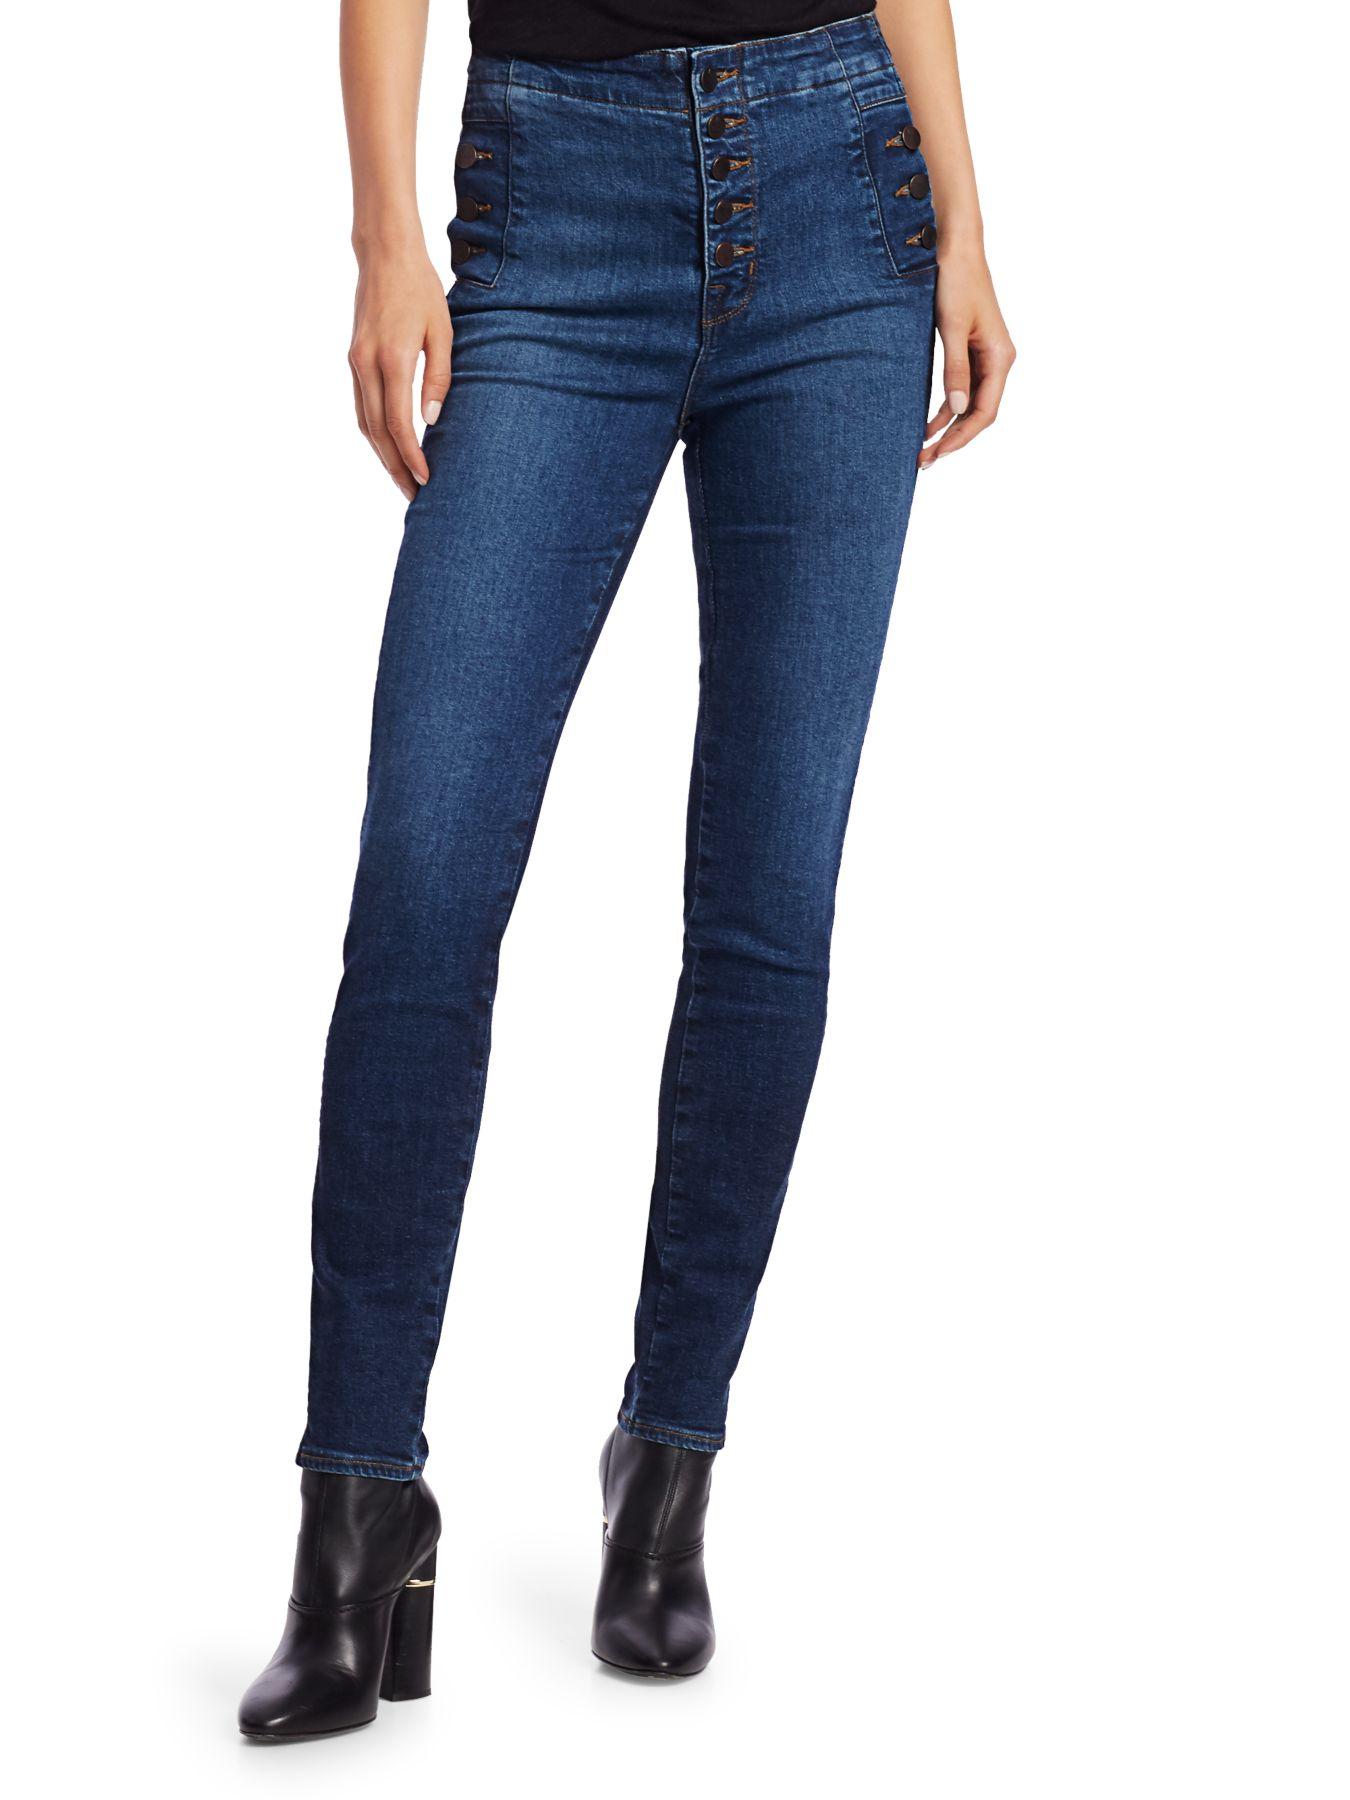 J Brand Denim Natasha High-rise Button Skinny Jeans in Blue - Lyst